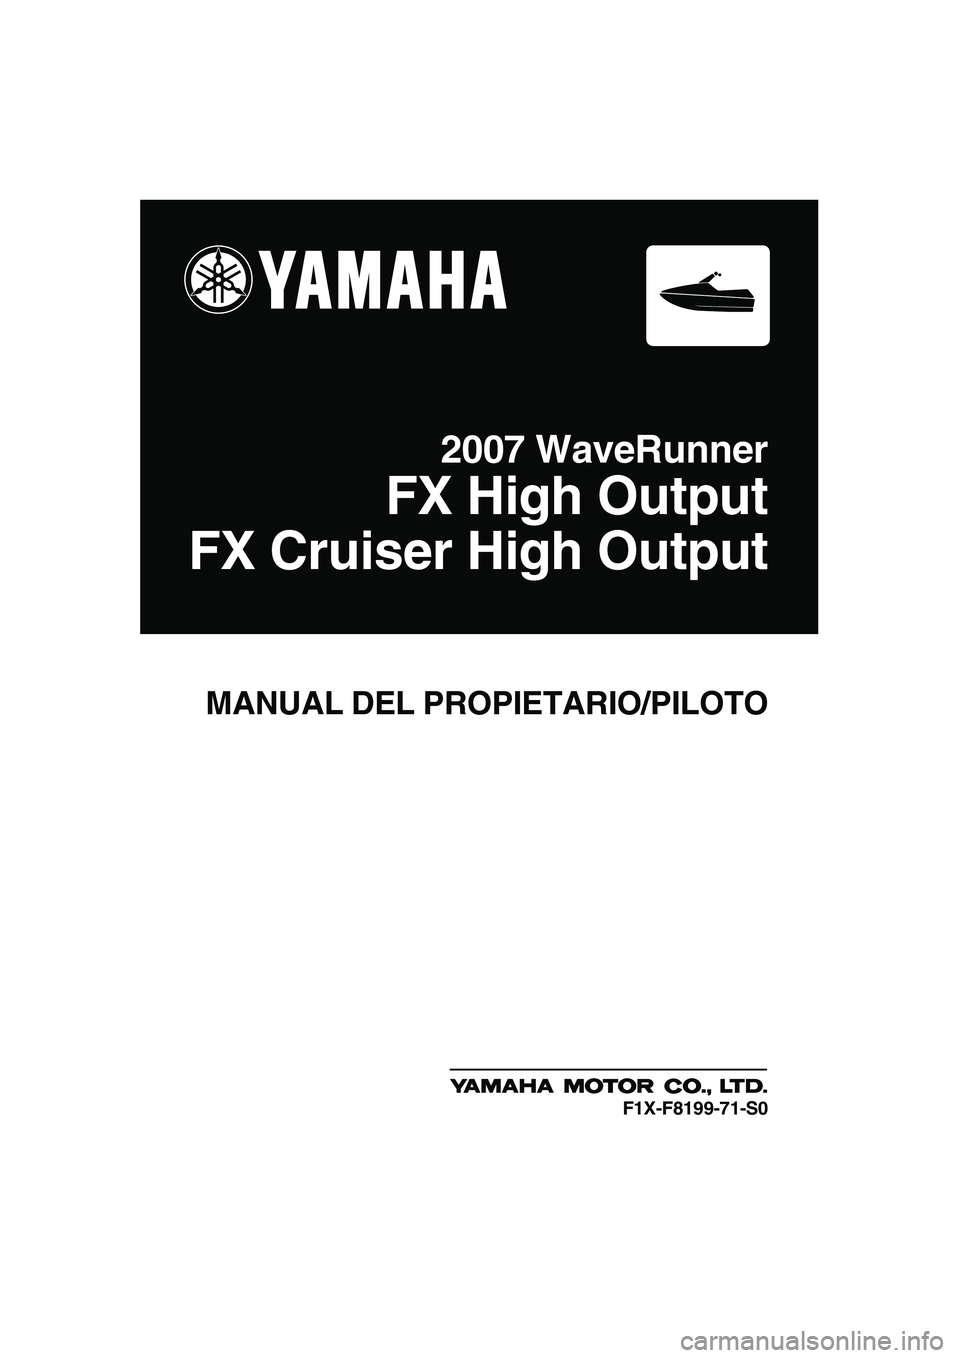 YAMAHA FX HO 2007  Manuale de Empleo (in Spanish) 